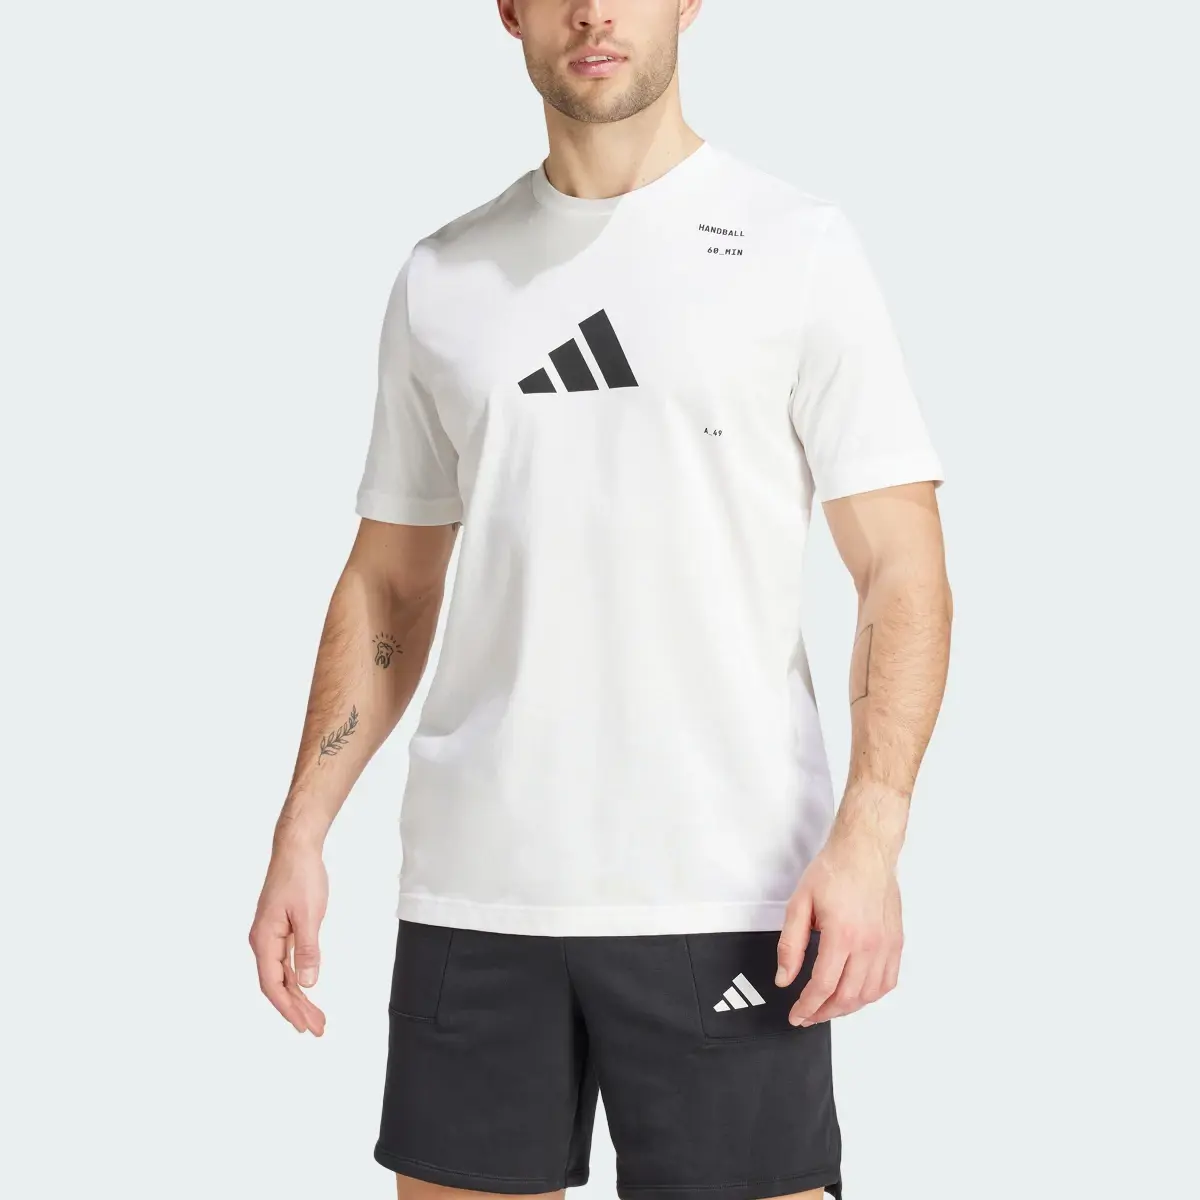 Adidas Handball Category Graphic T-Shirt. 1